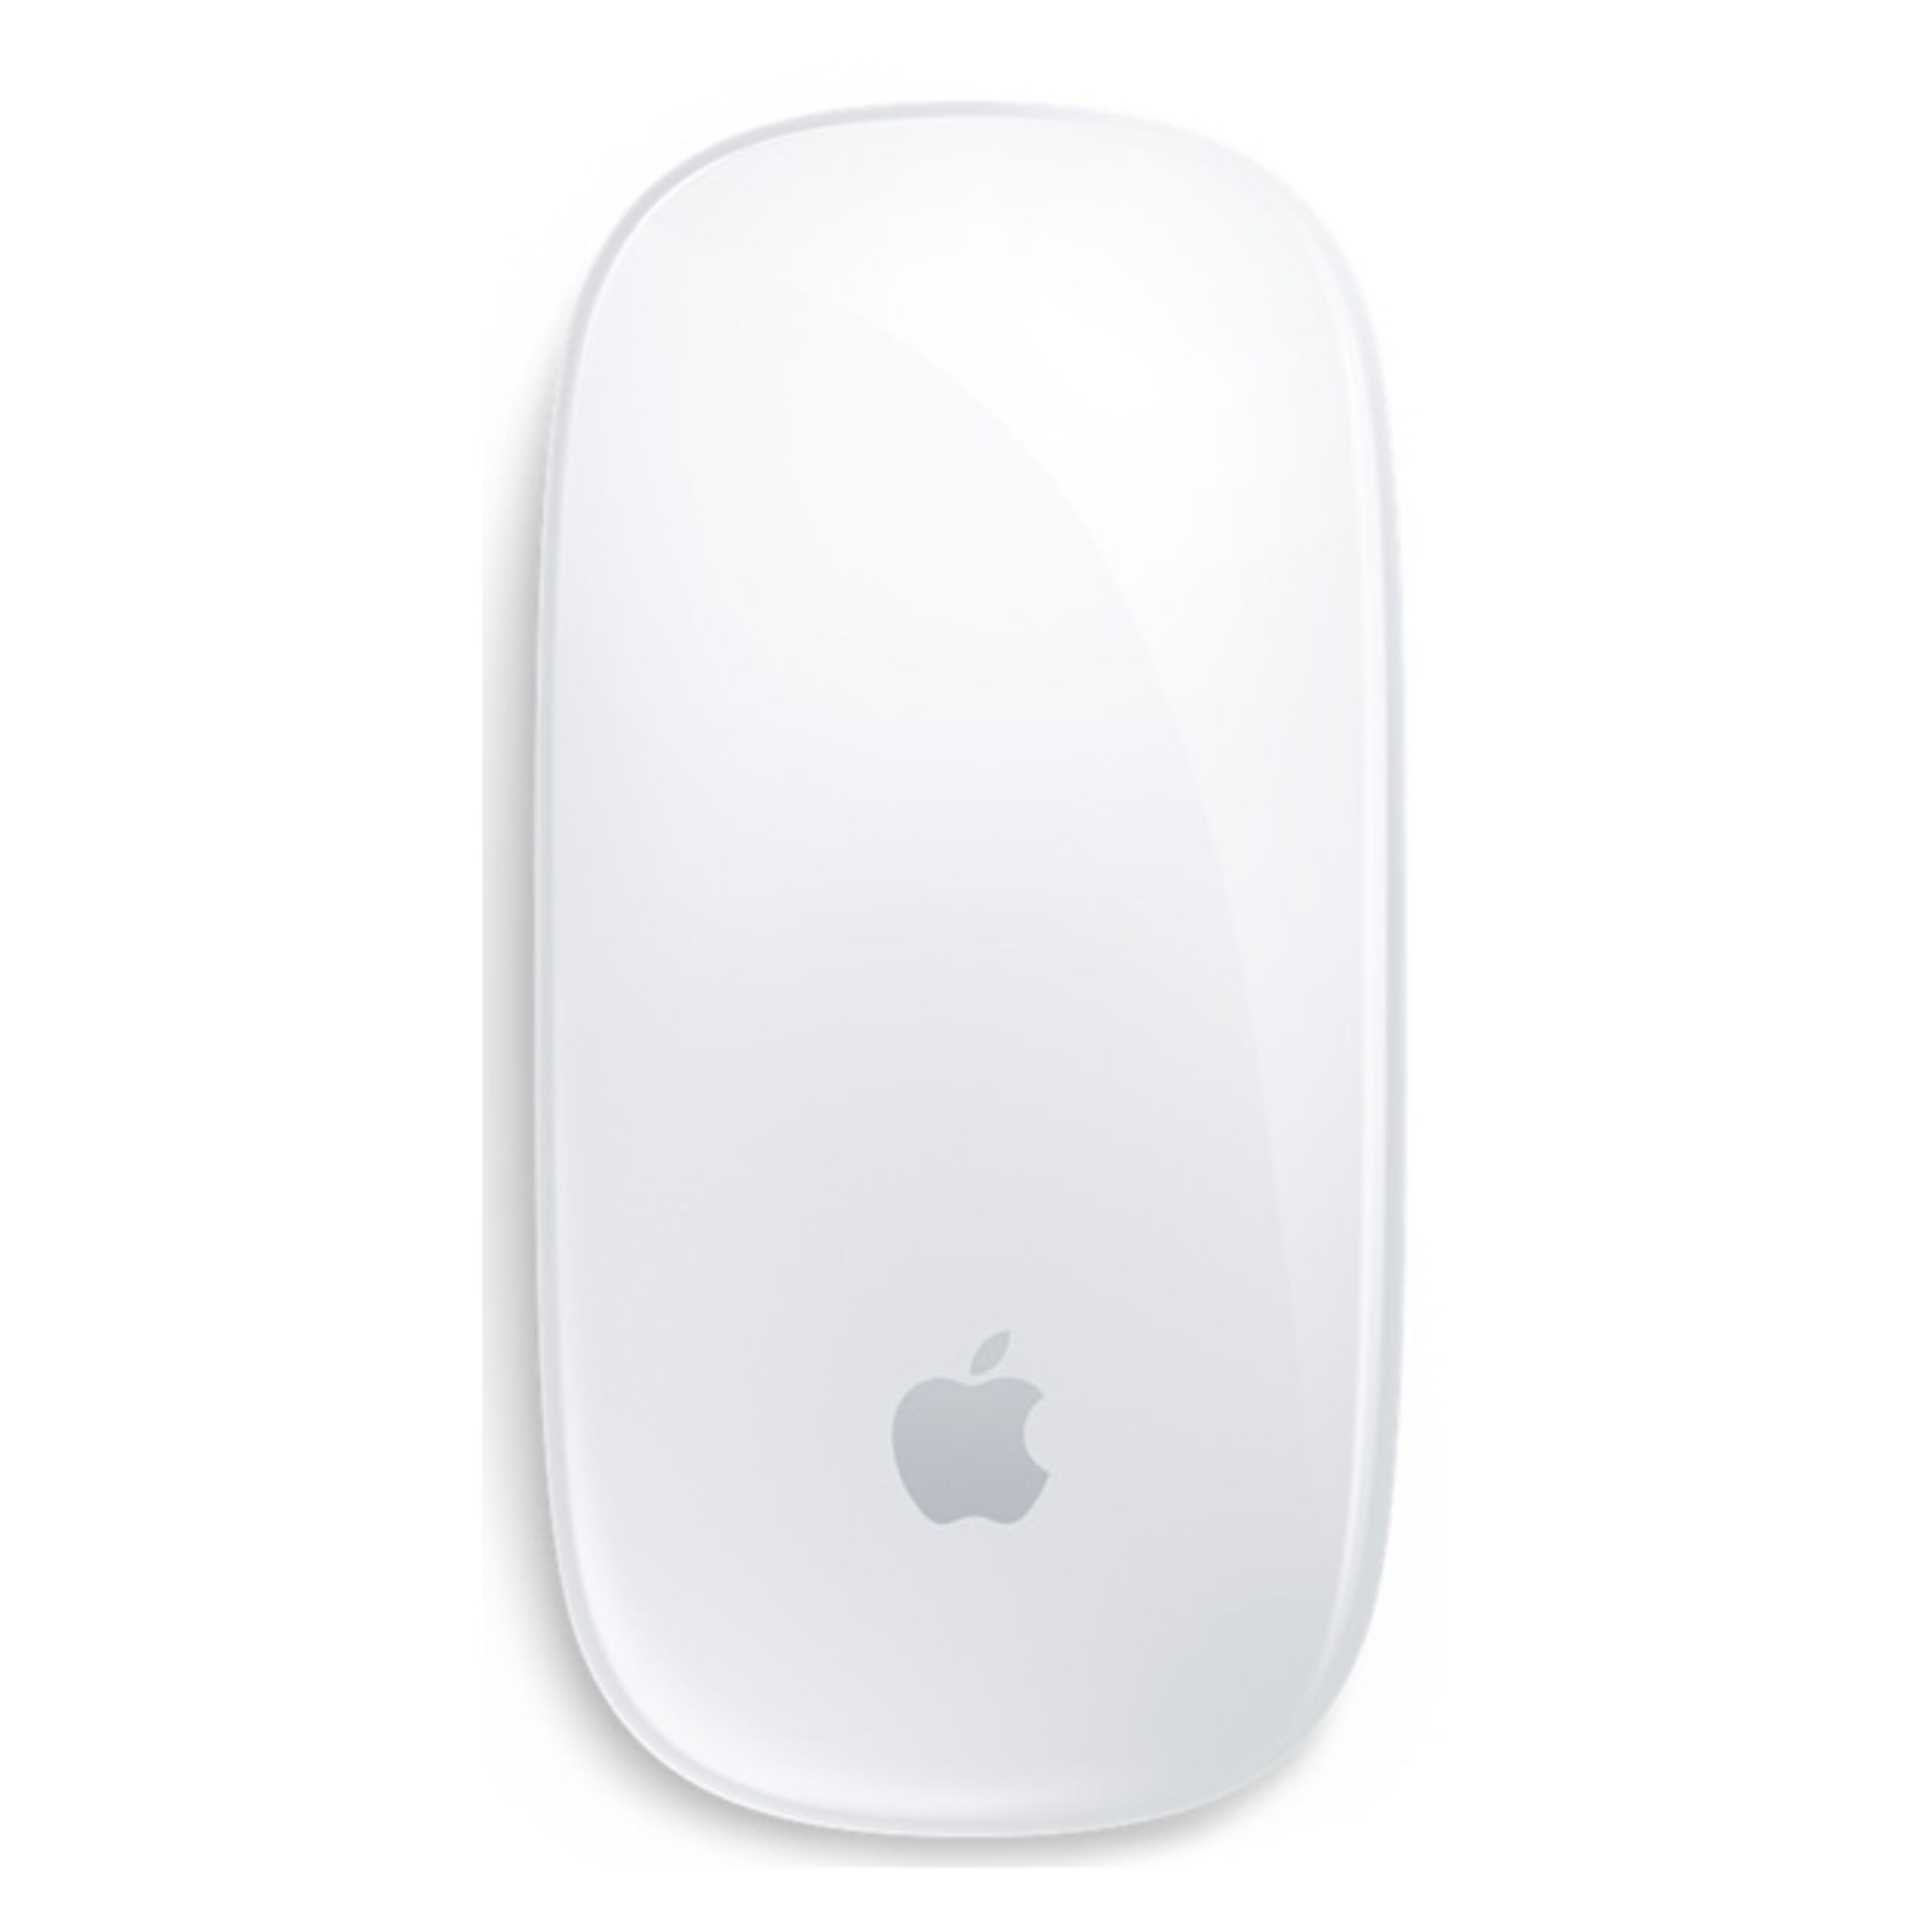 Apple Magic Mouse 2 - Trådlösa möss | Kjell.com